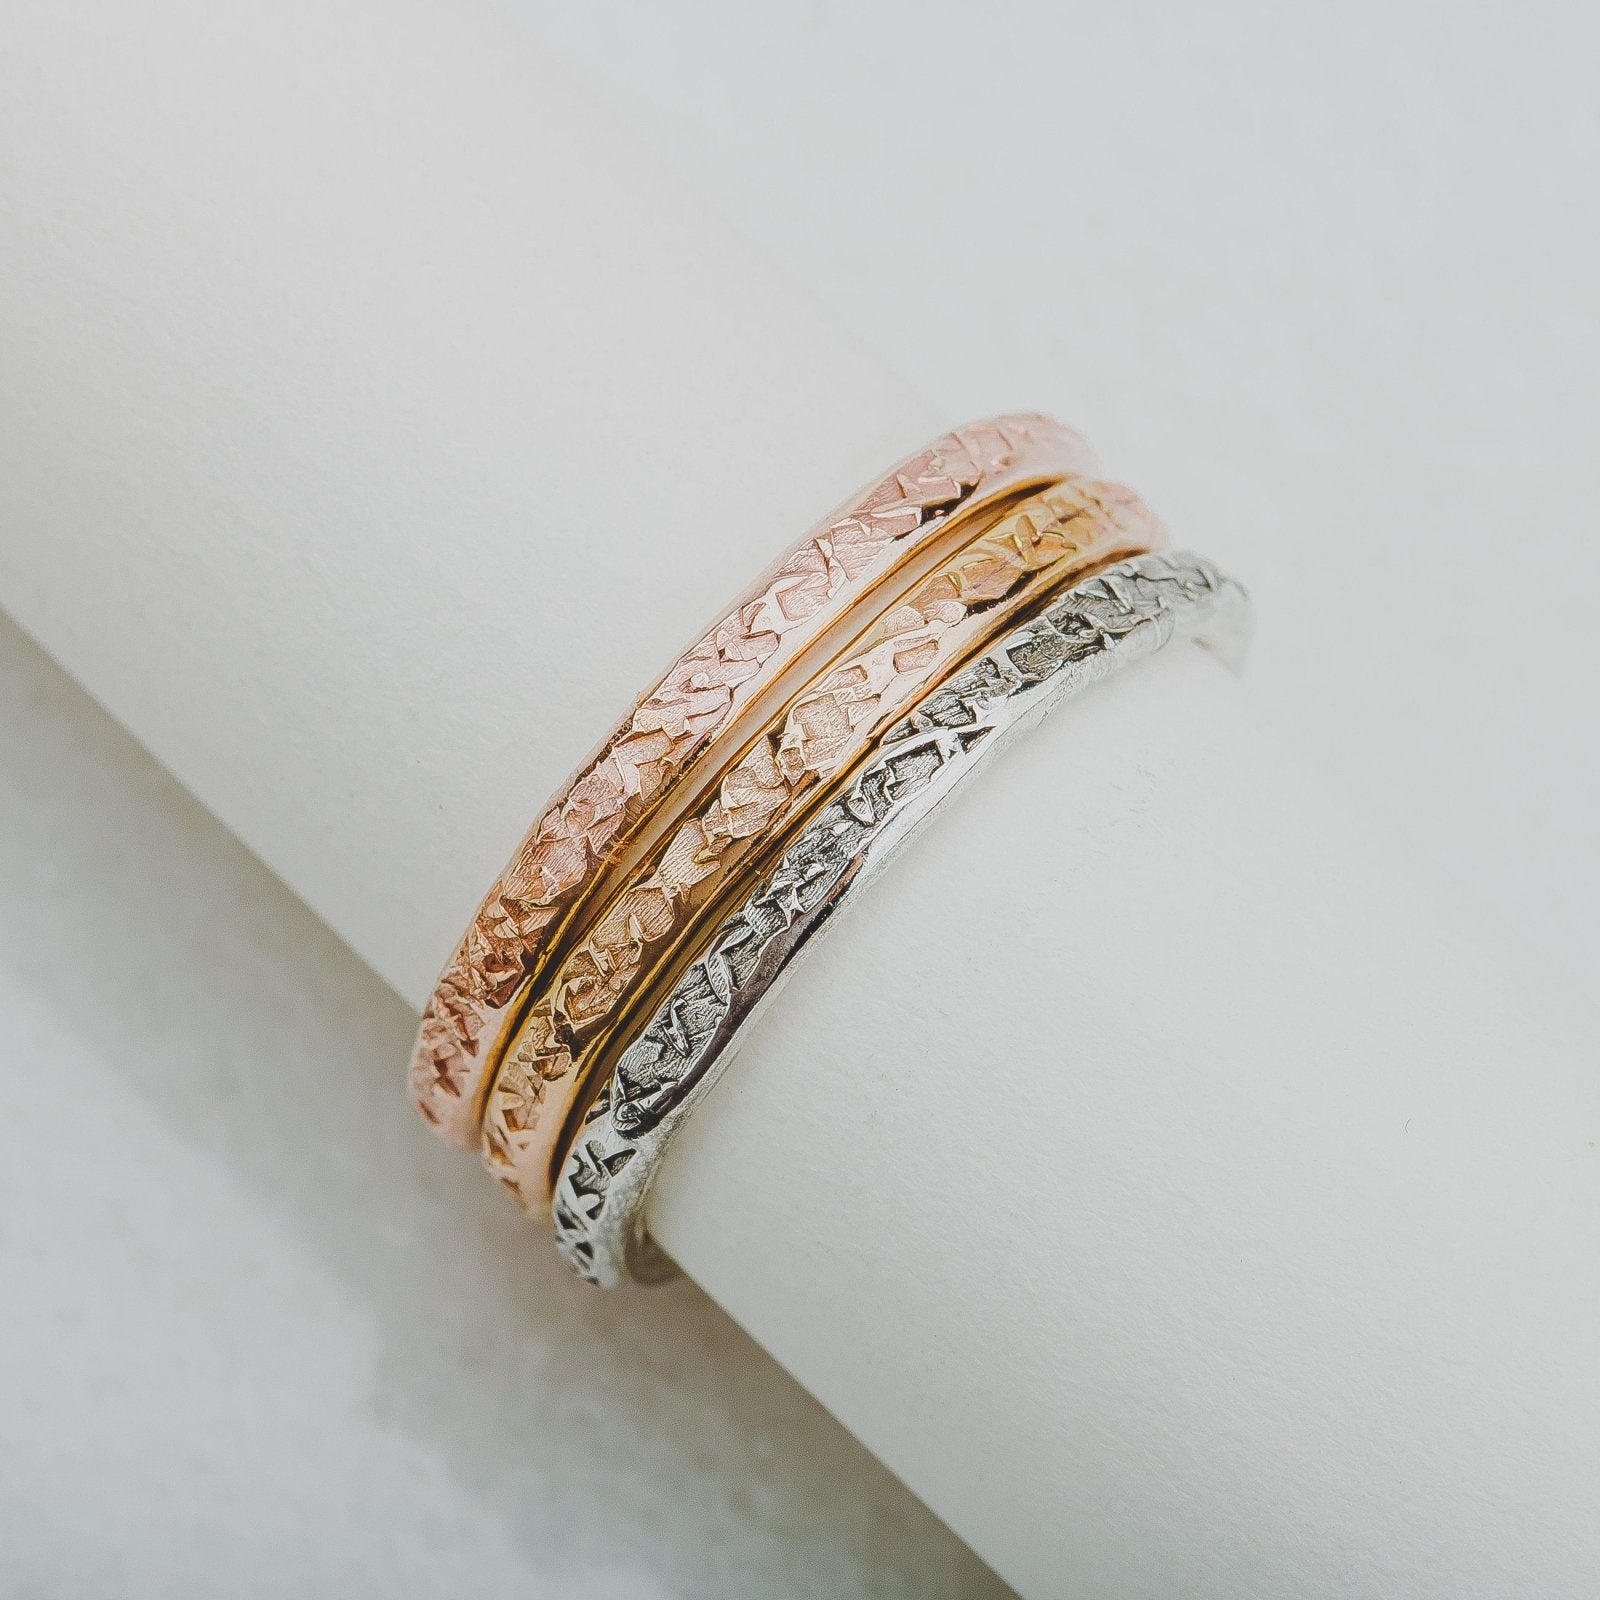 Raw Silk Stacking Rings - Melanie Golden Jewelry - rings stacking rings